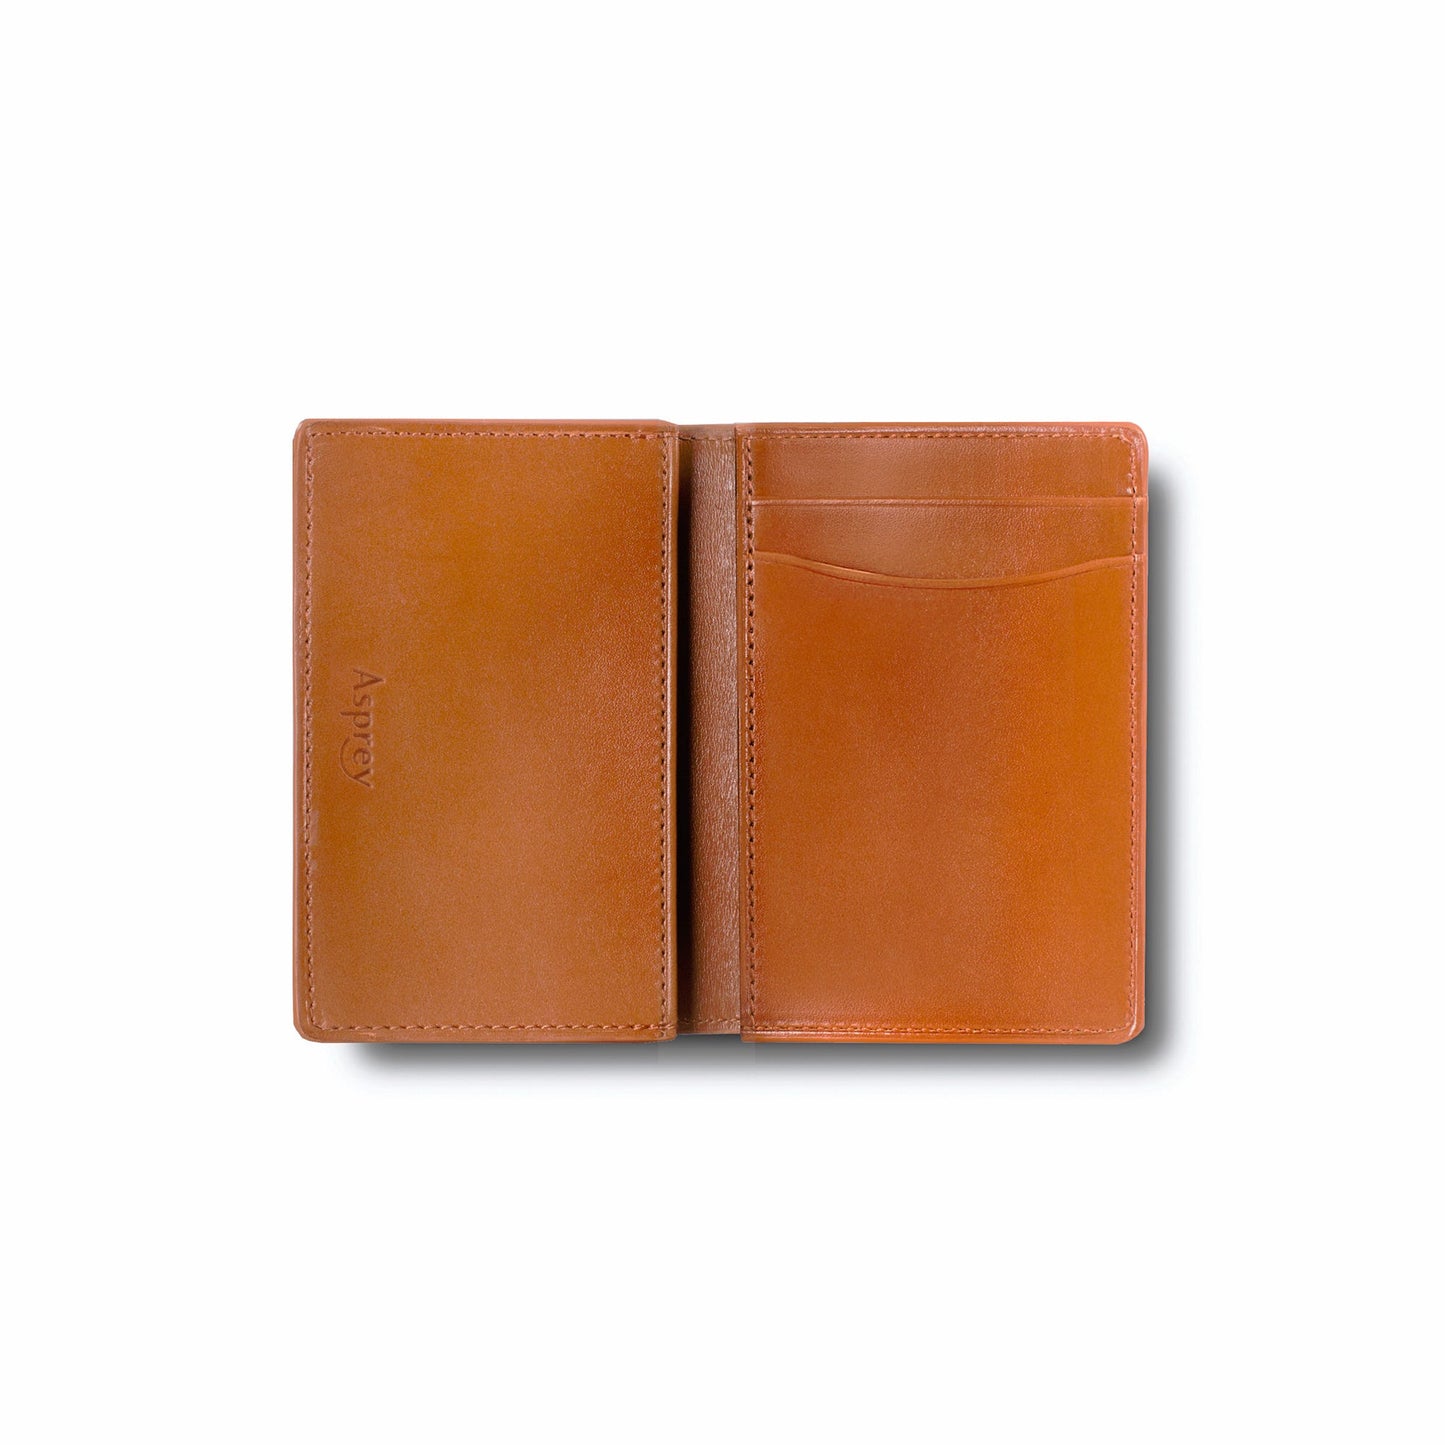 Hanover Folding Card Holder in Saddle Leather